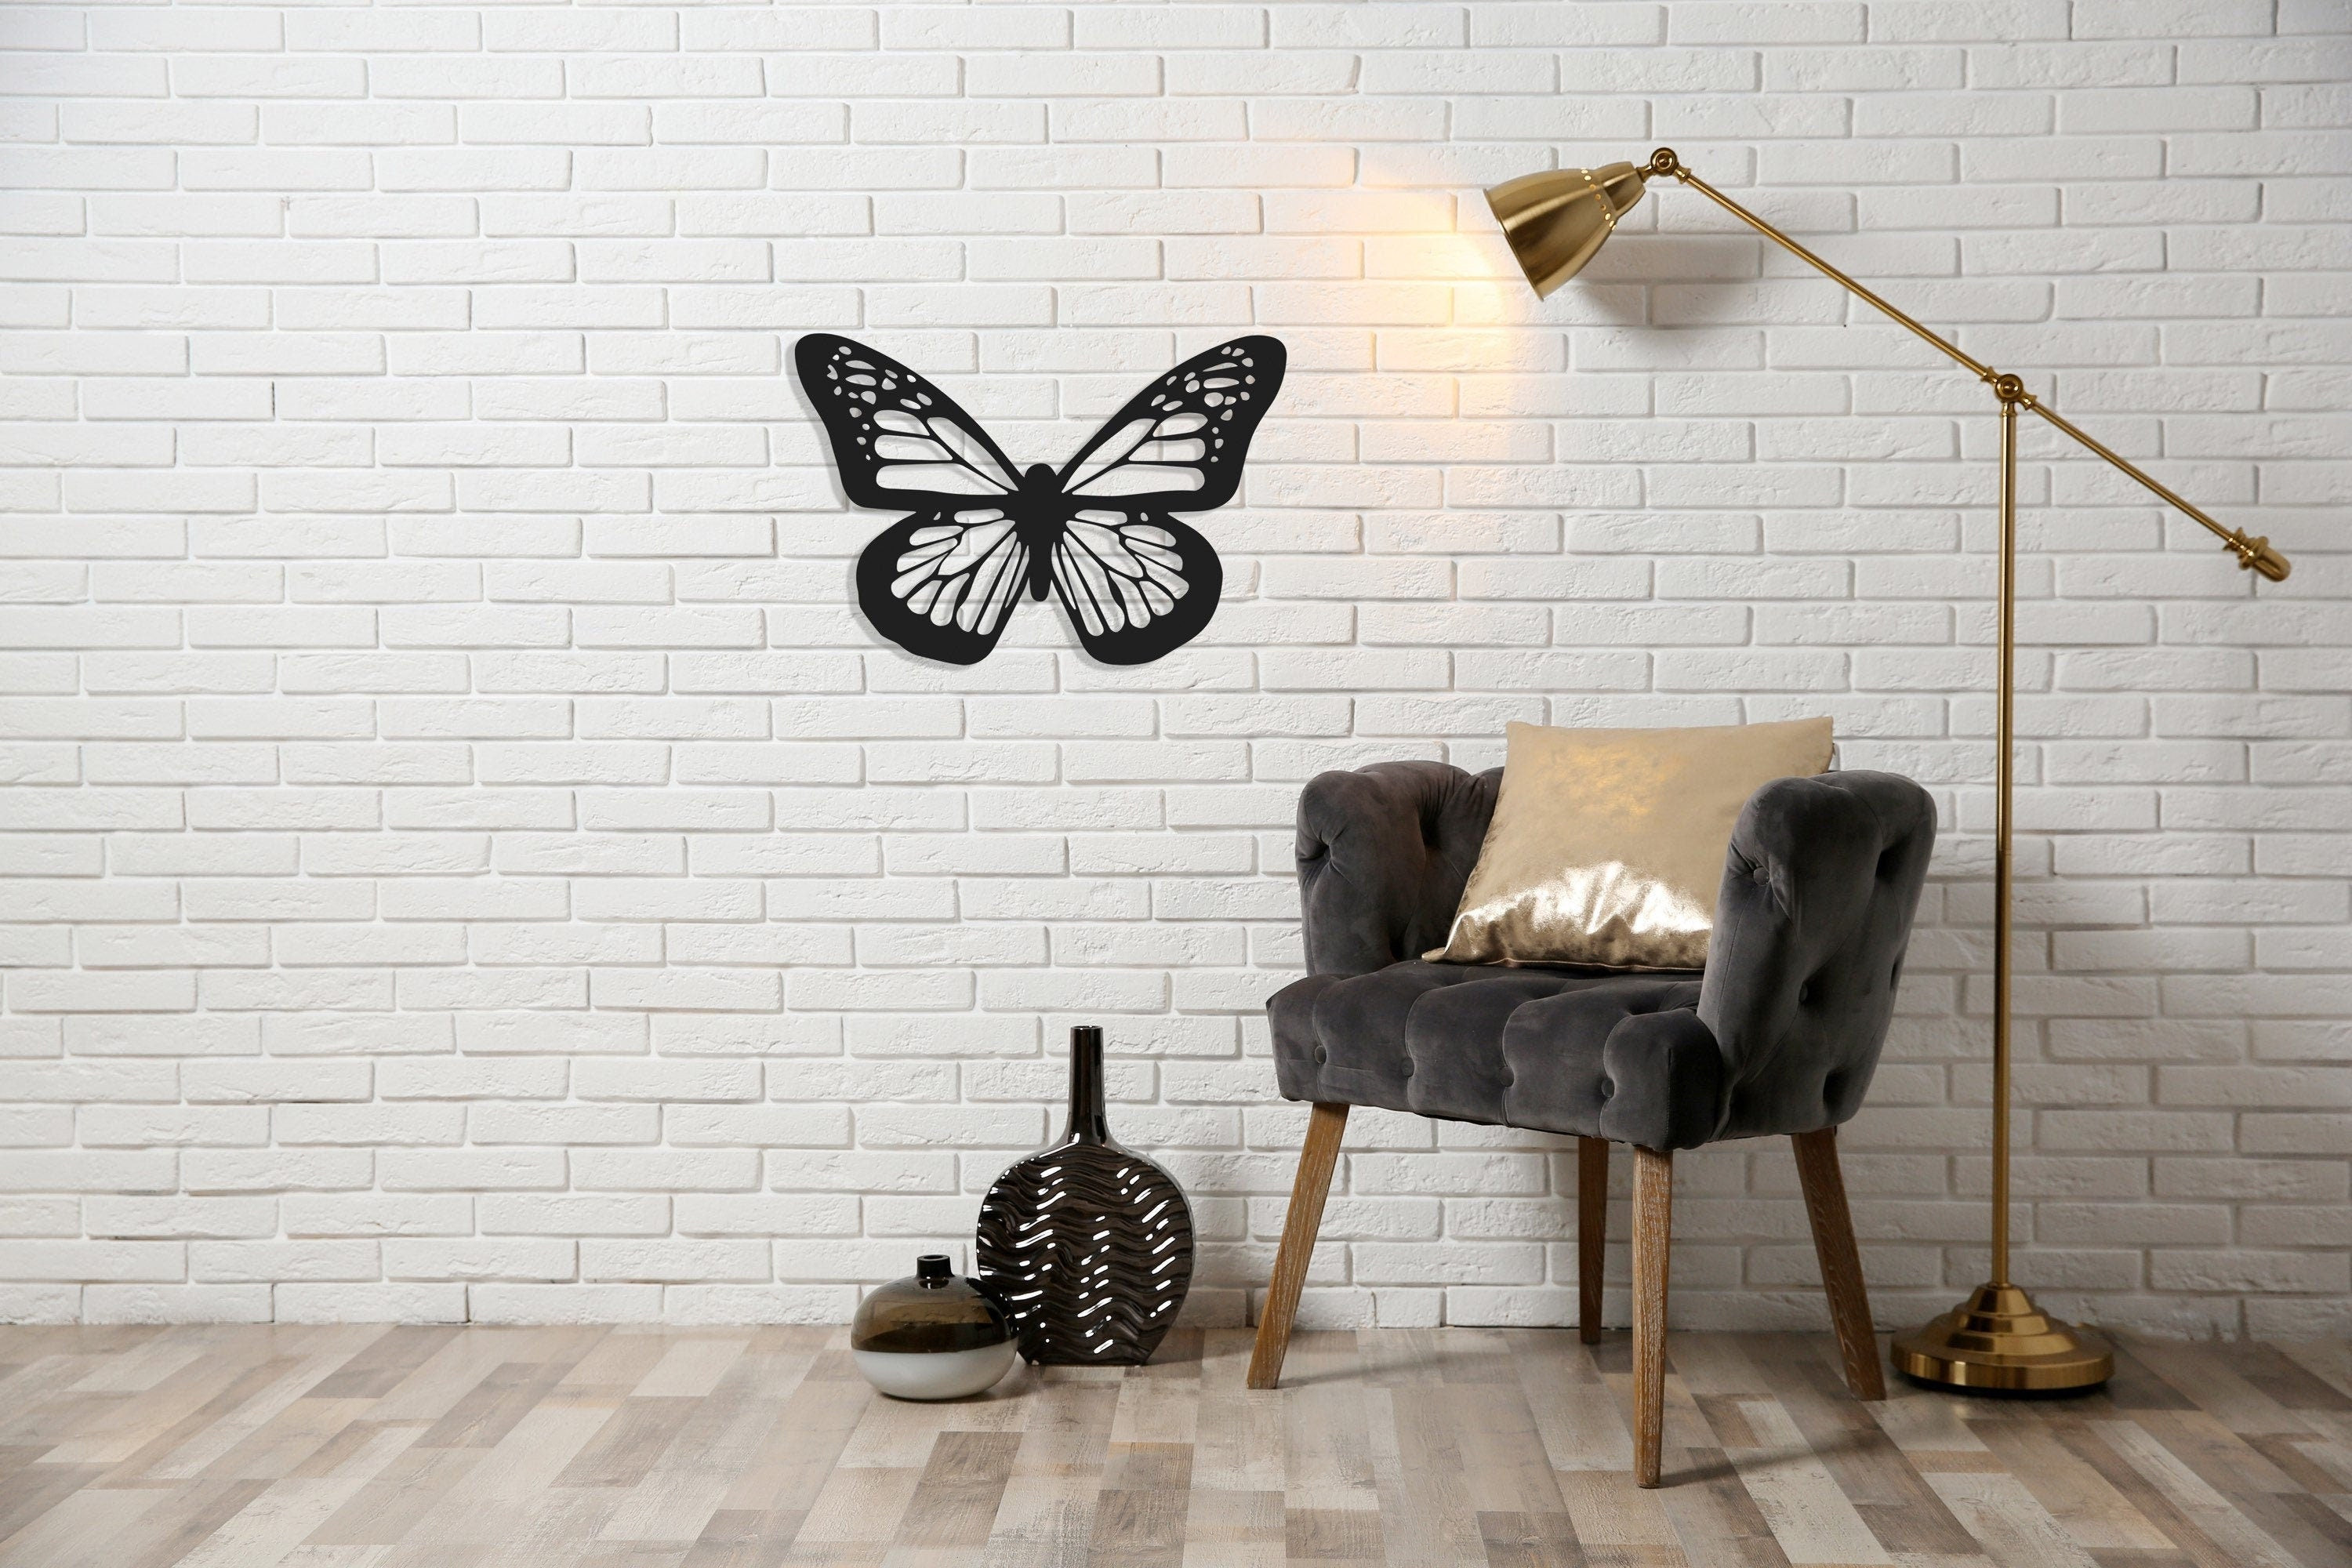 Butterfly Metal Wall Art, Butterfly Wings Wall Decor, Housewarming Gift, Office Wall Decor, Living Room Decor, Animal Art, Metal Laser Cut Metal Signs Custom Gift Ideas 12x12IN